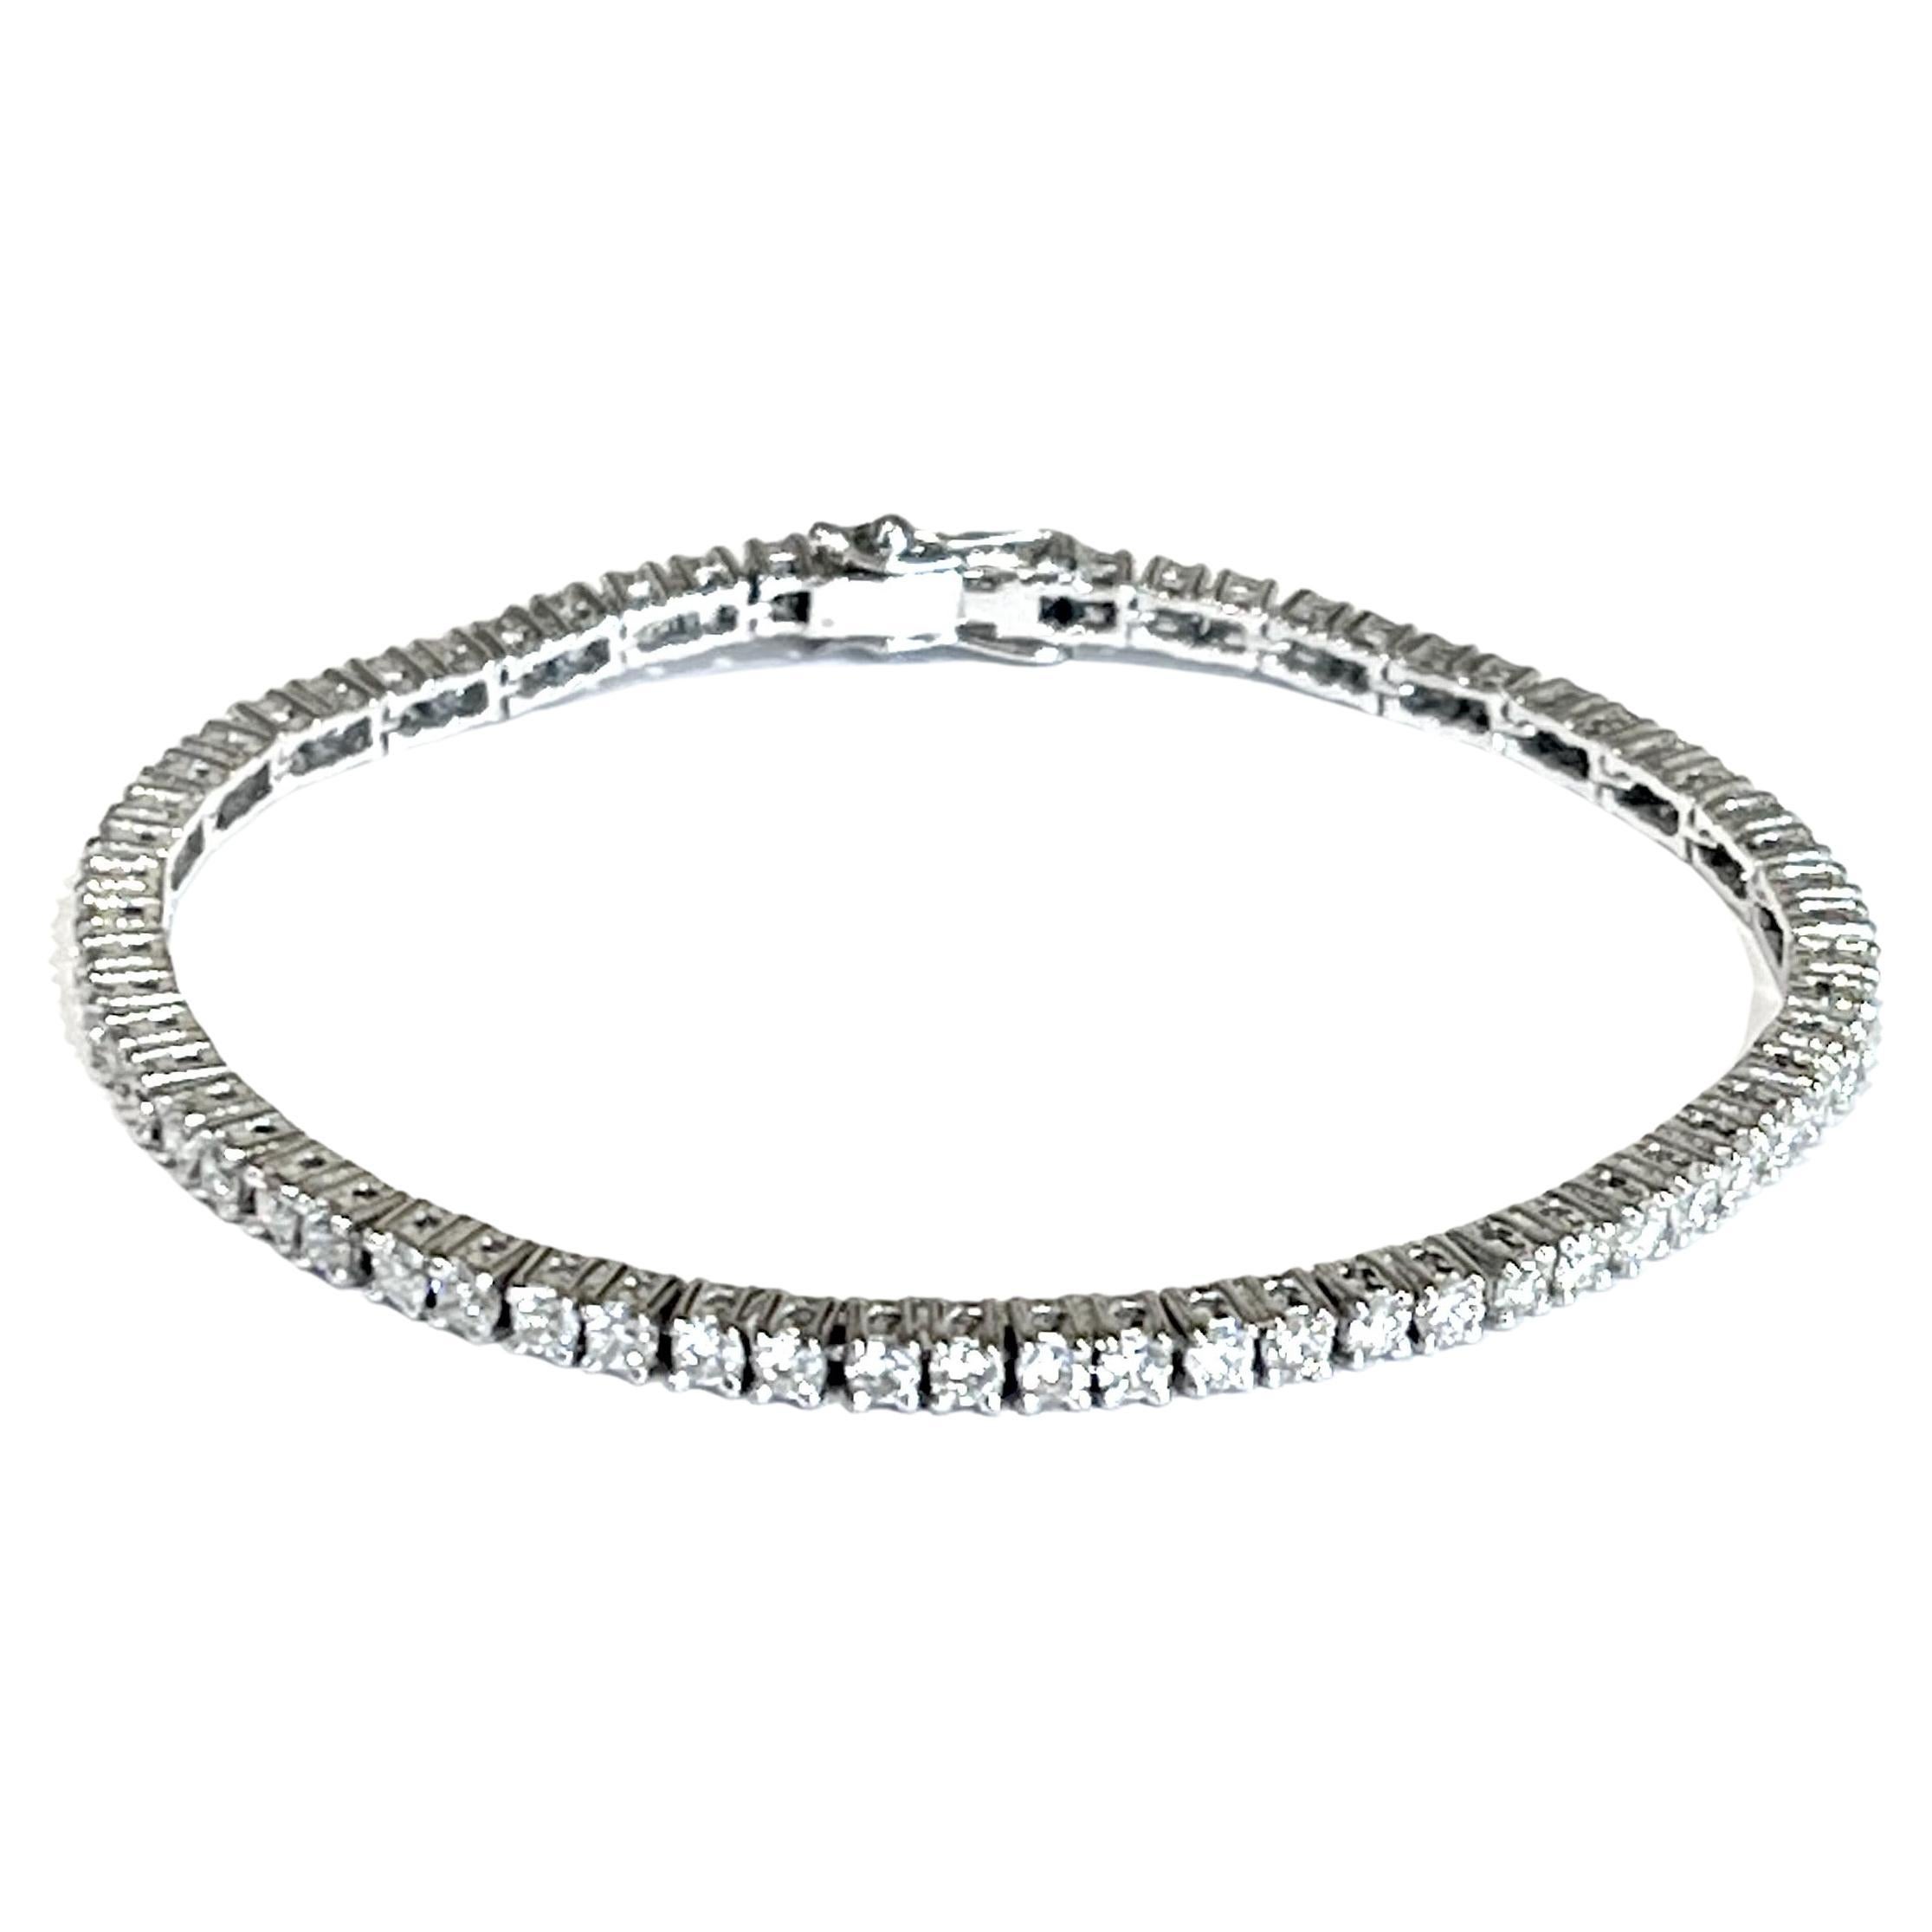 Bracelet tennis en or blanc 18 carats avec diamants naturels de 3,25 carats